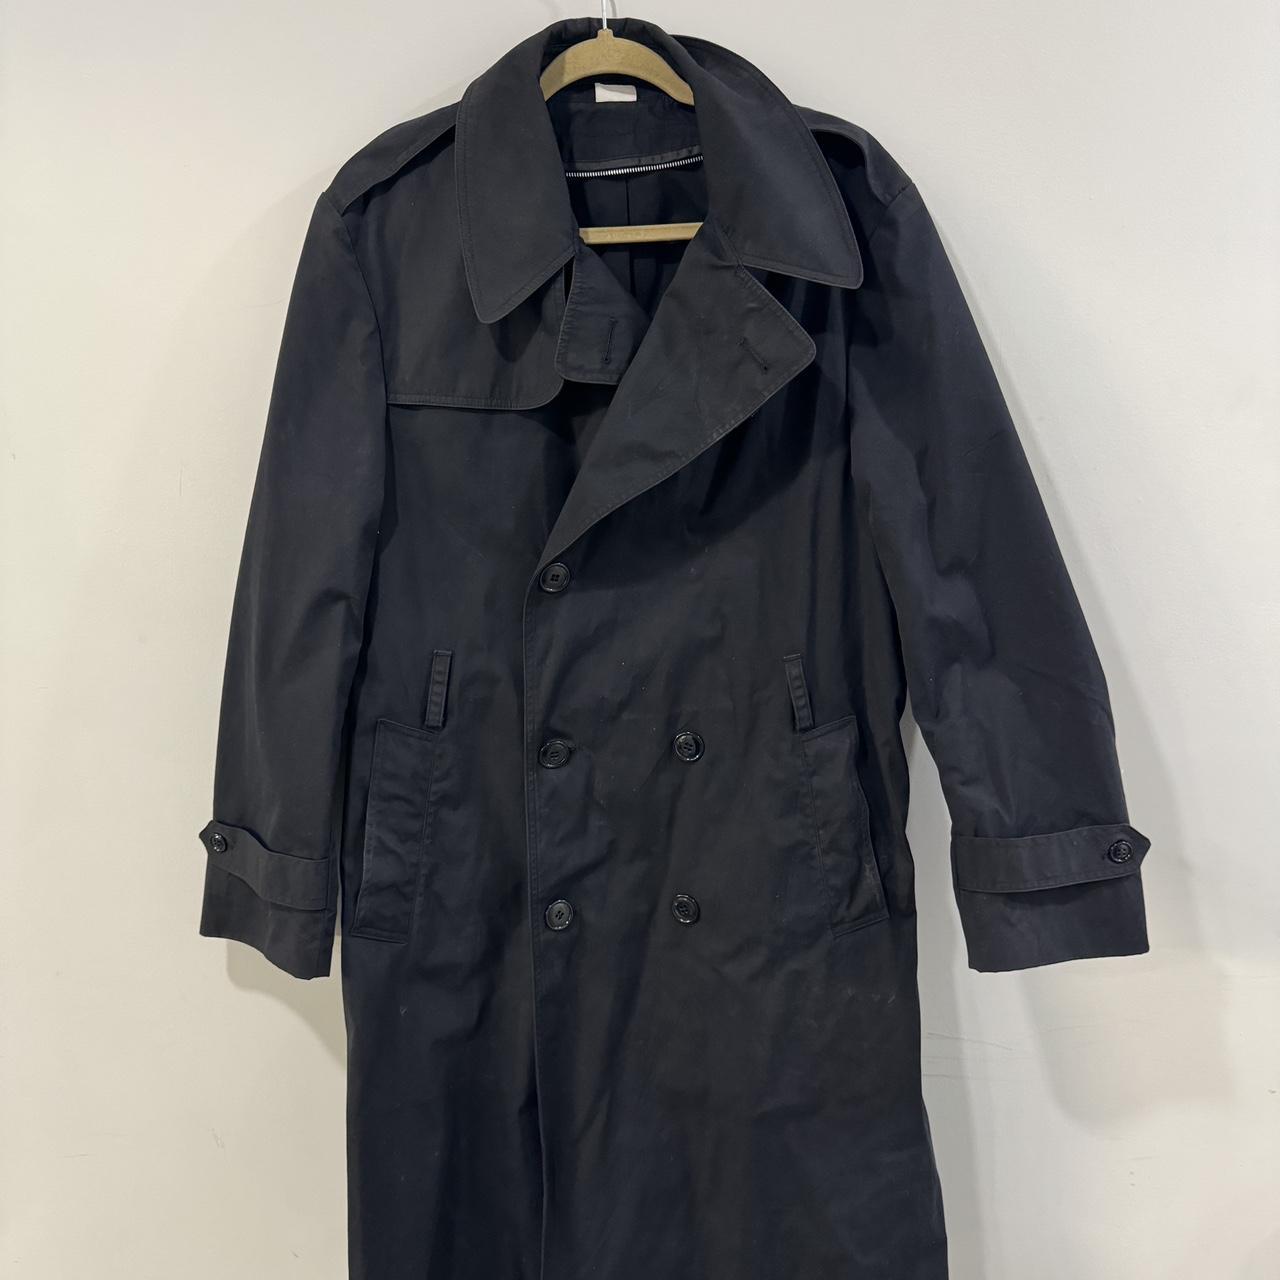 TRENCH COAT #vintage #black #trench #coat - Depop